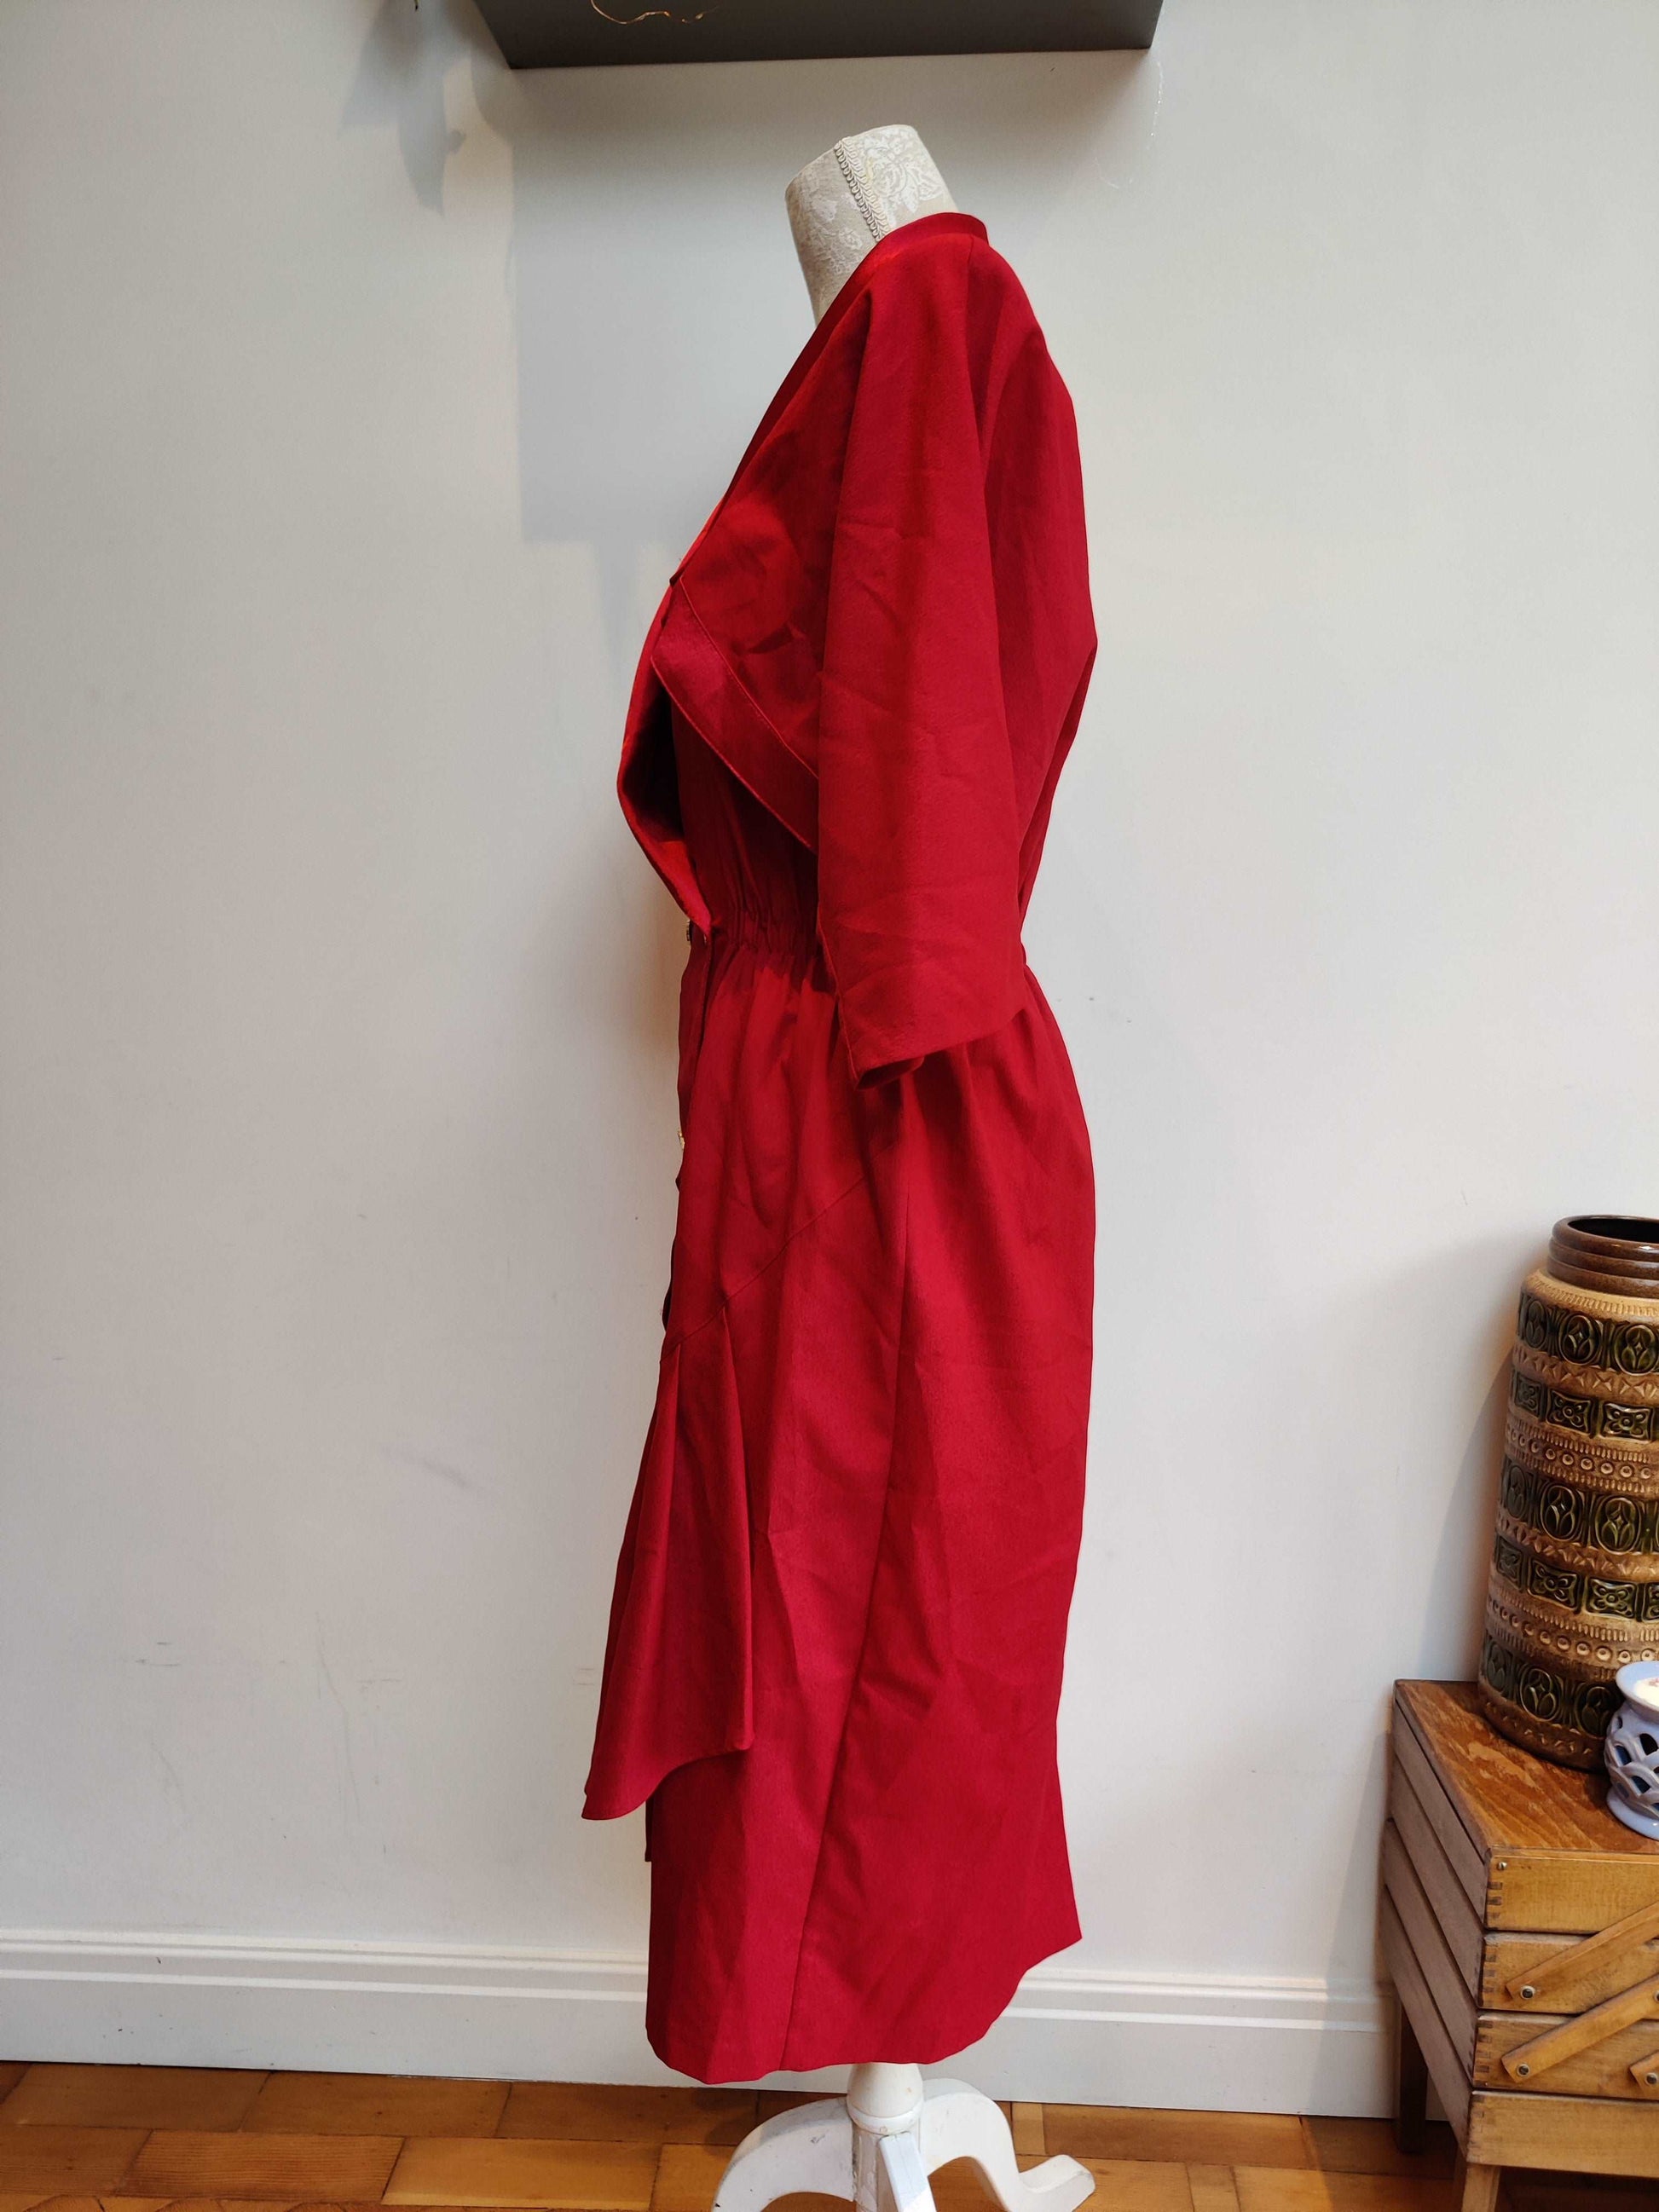 Stunning red 80s midi dress